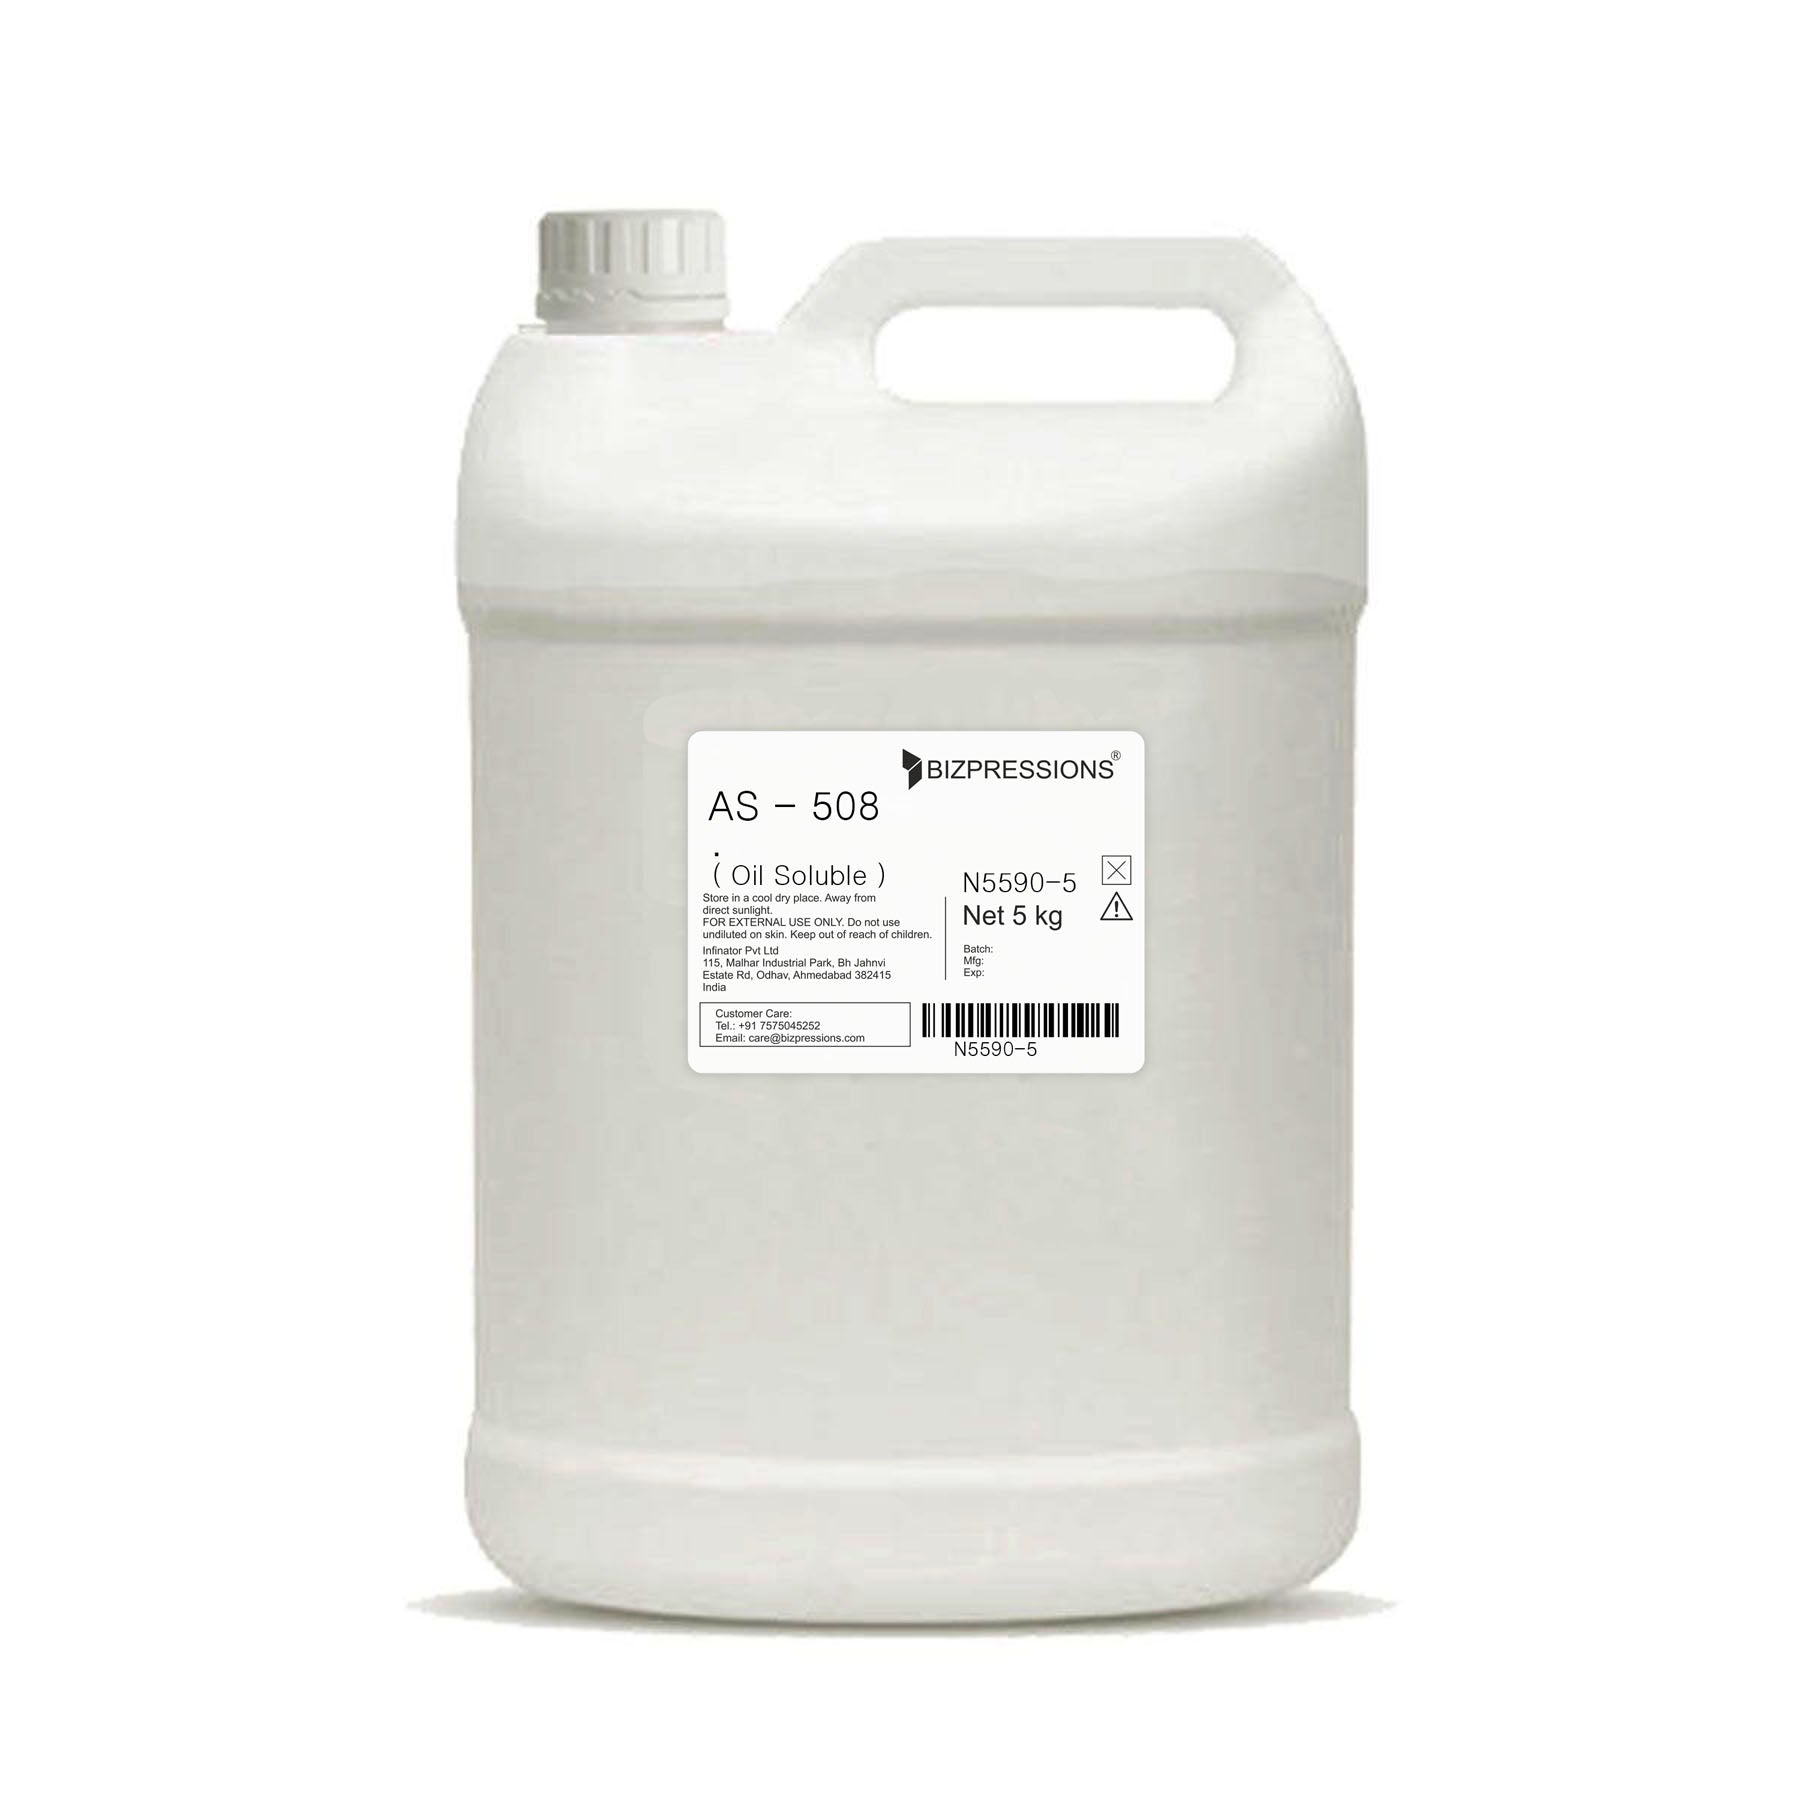 AS - 508 - Fragrance ( Oil Soluble ) - 5 kg